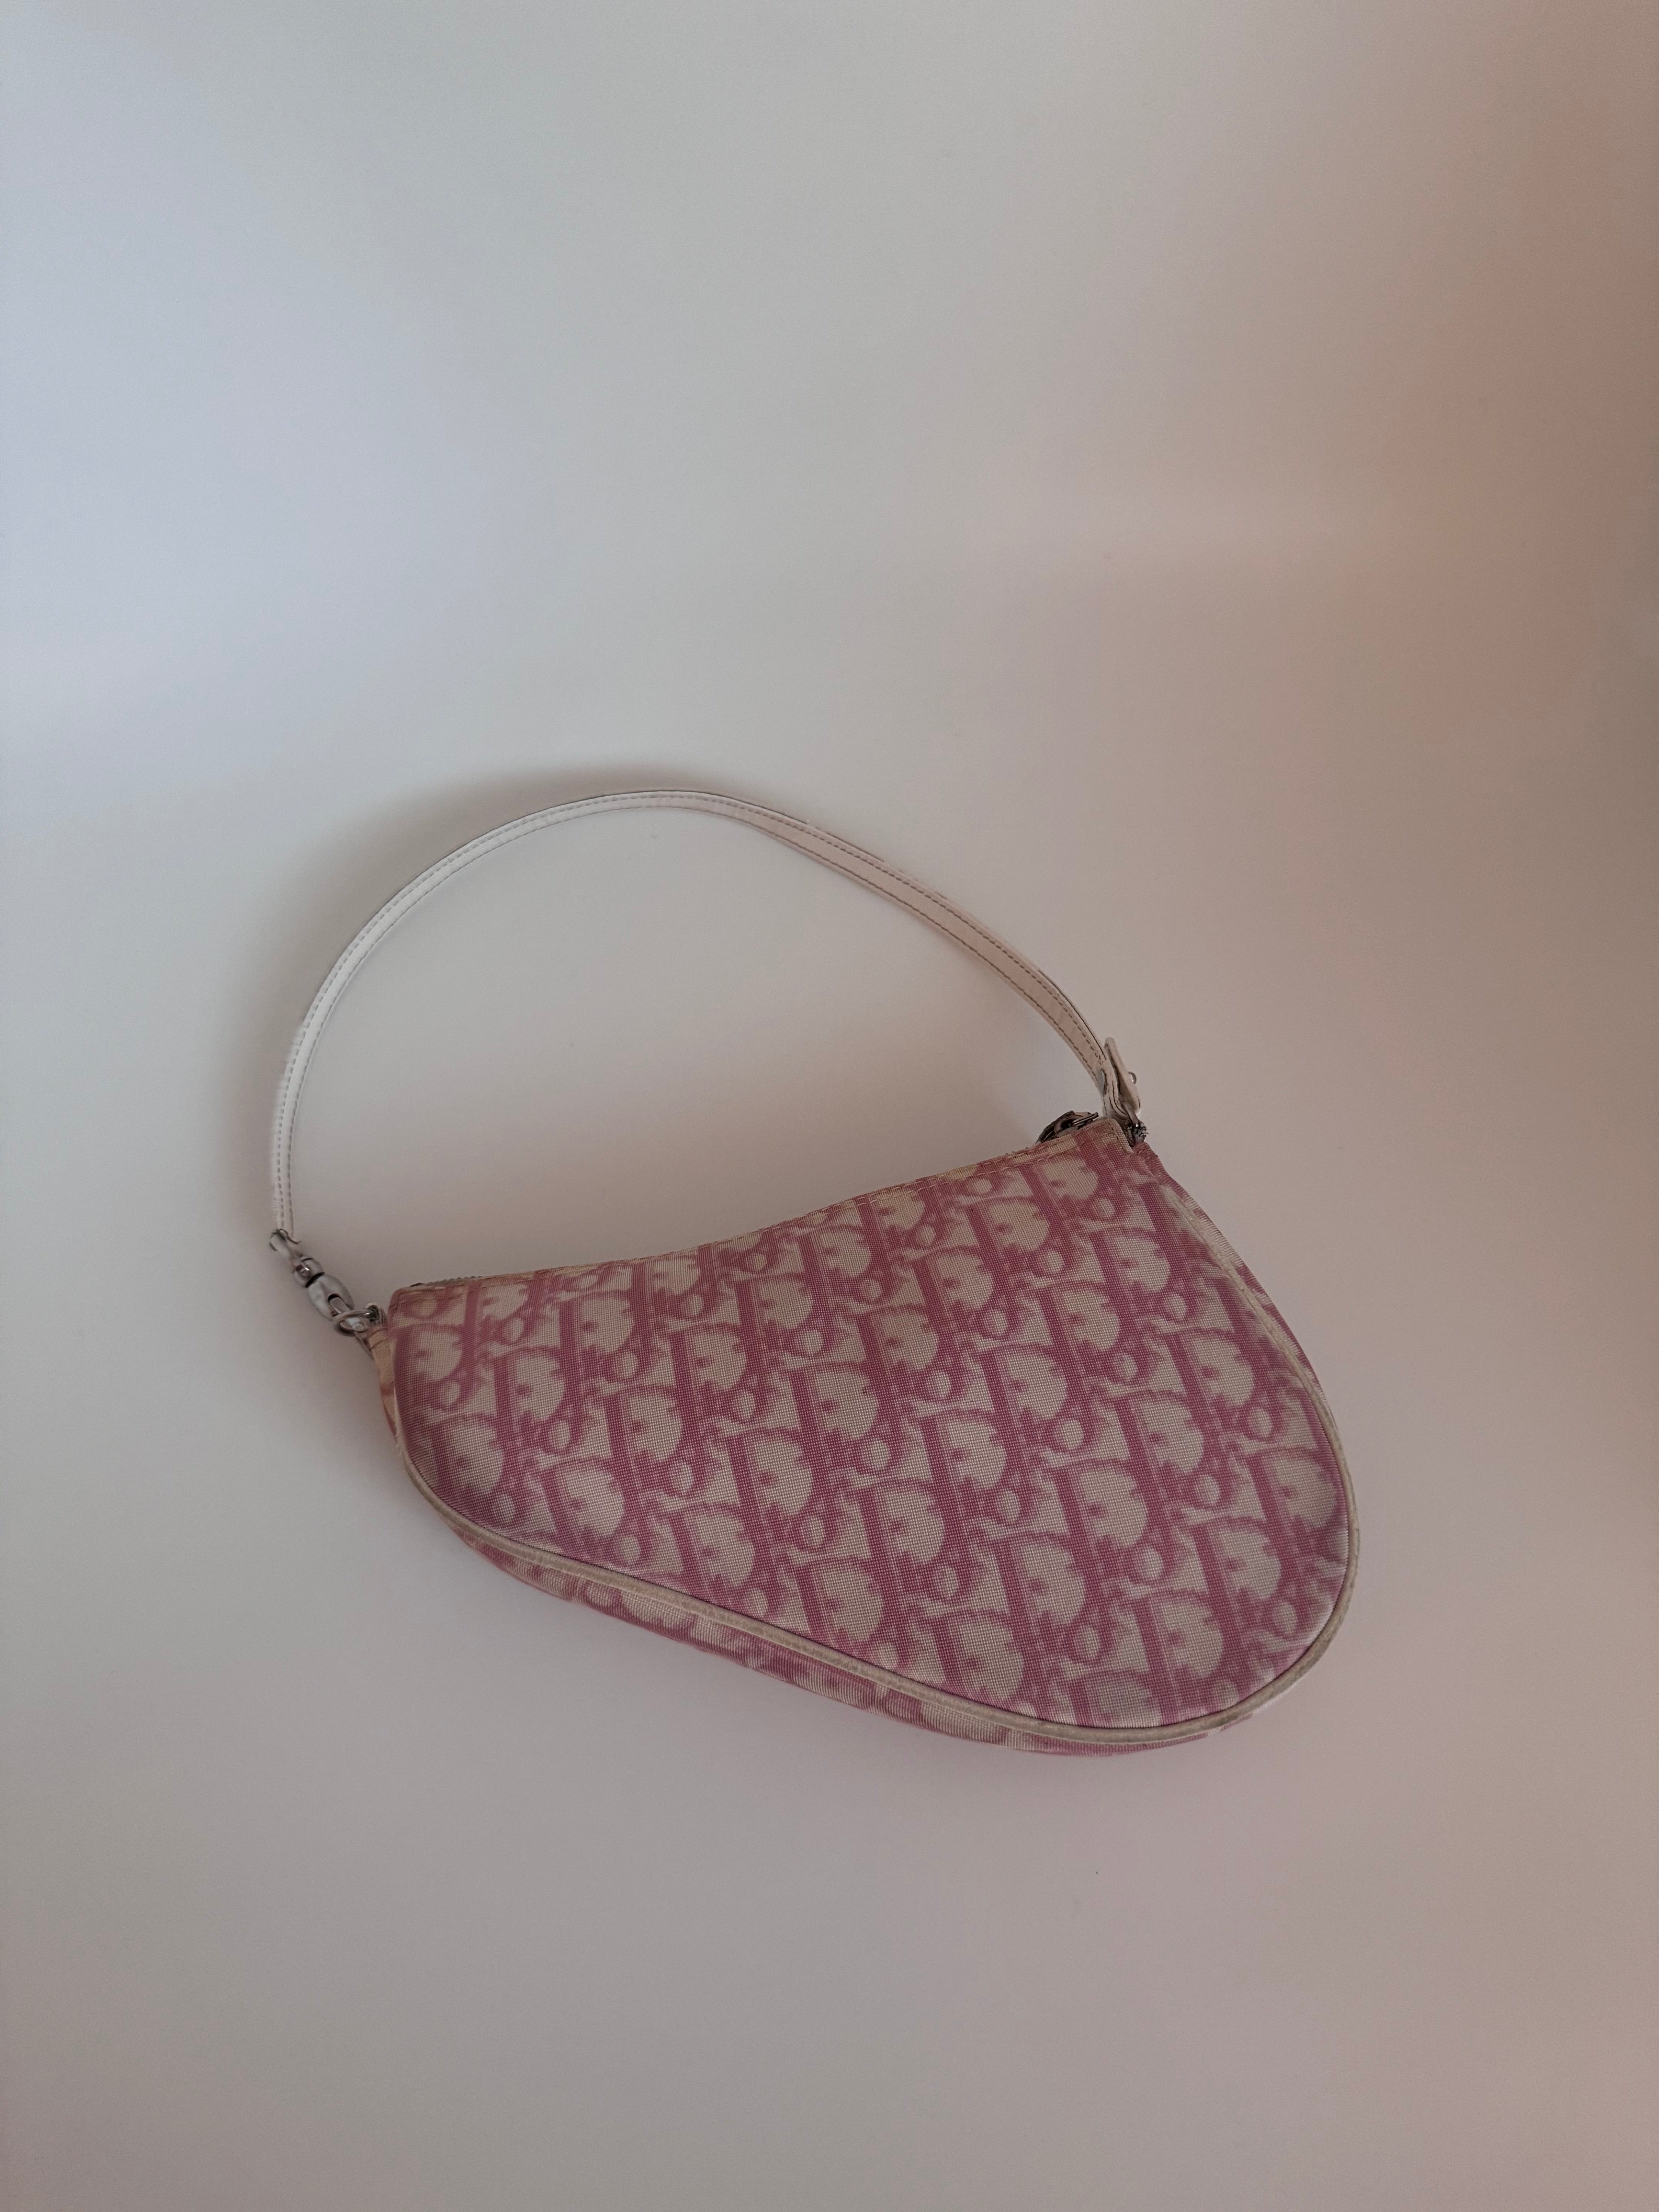 Dior saddle bag 😍 | Dior saddle bag, Purses, Dior